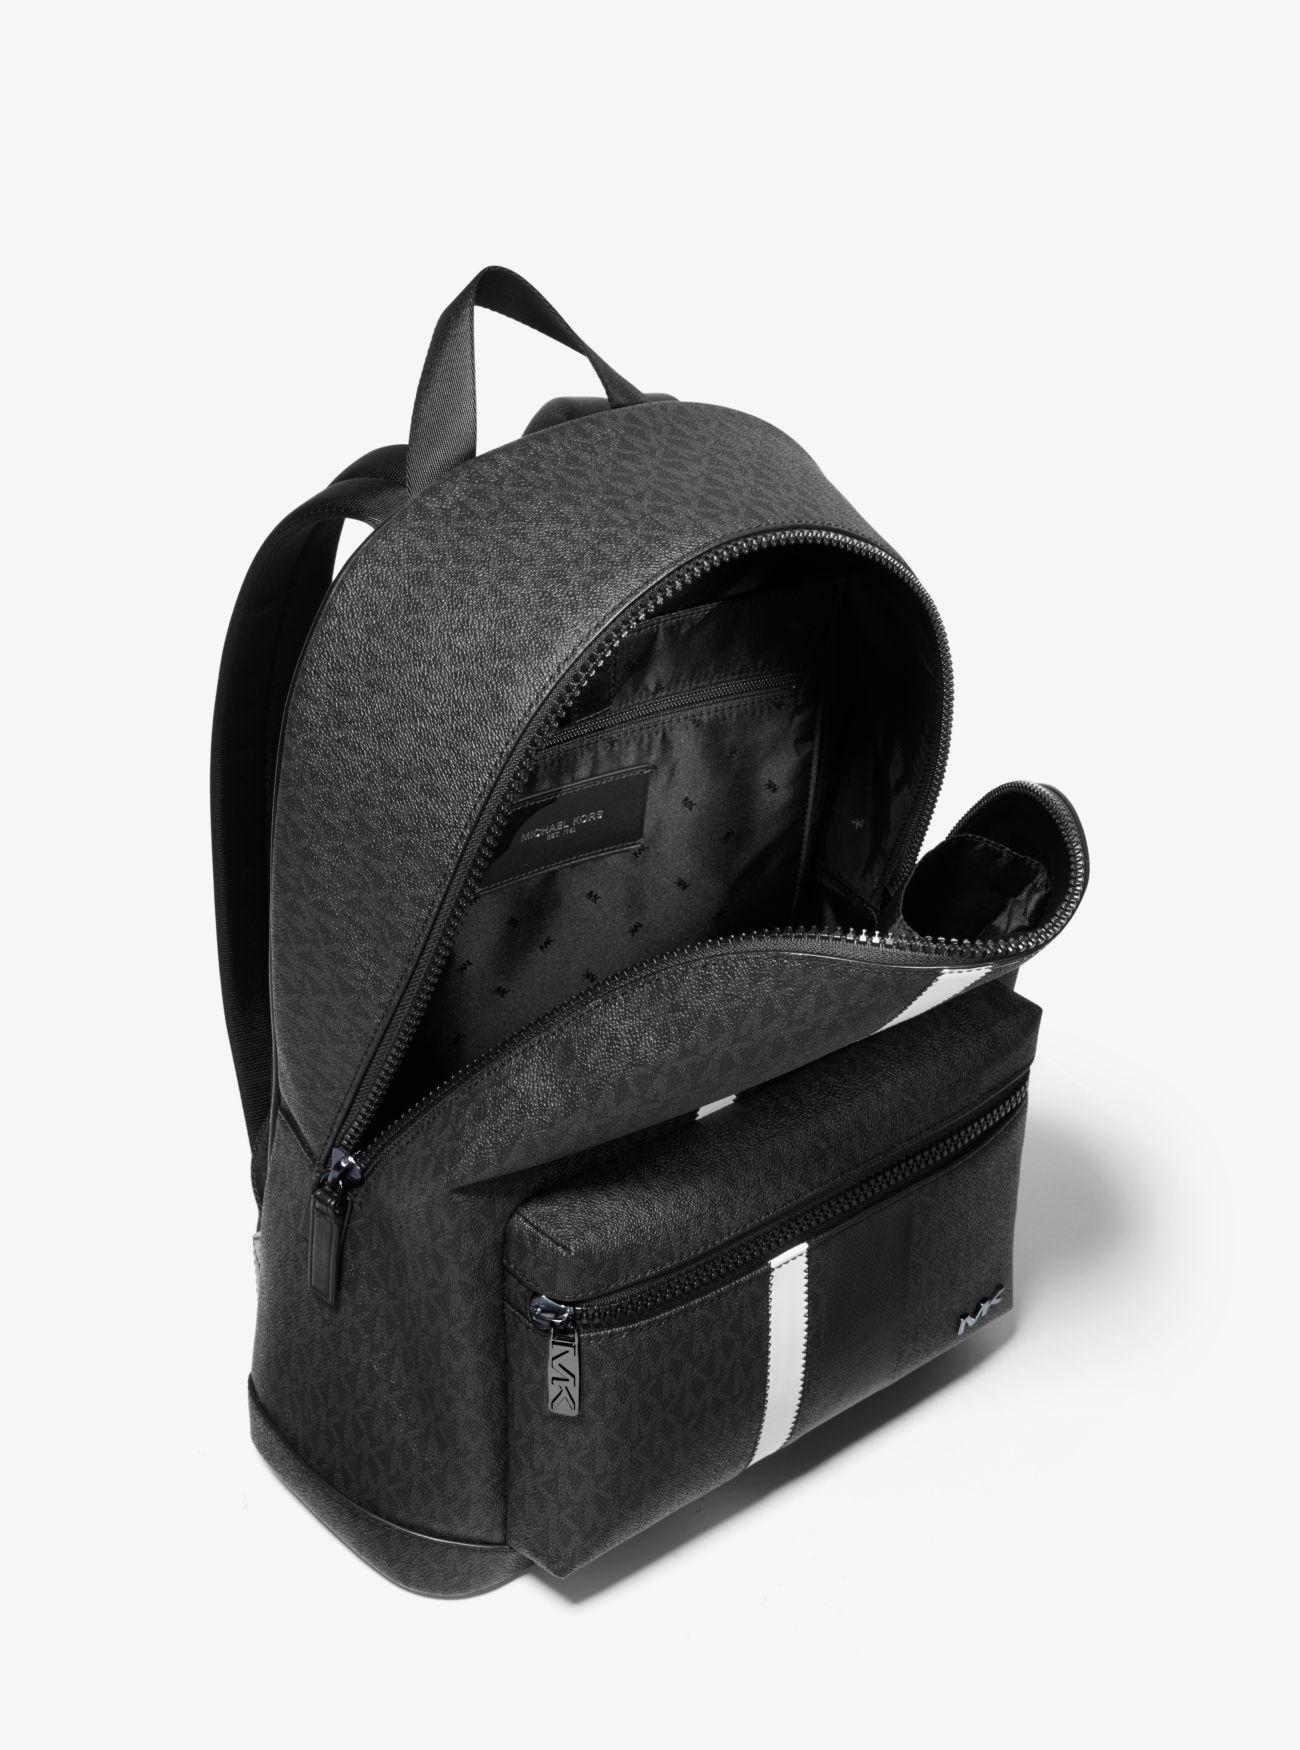 Michael Kors Men's Brooklyn Backpack Purse | Paul Smith